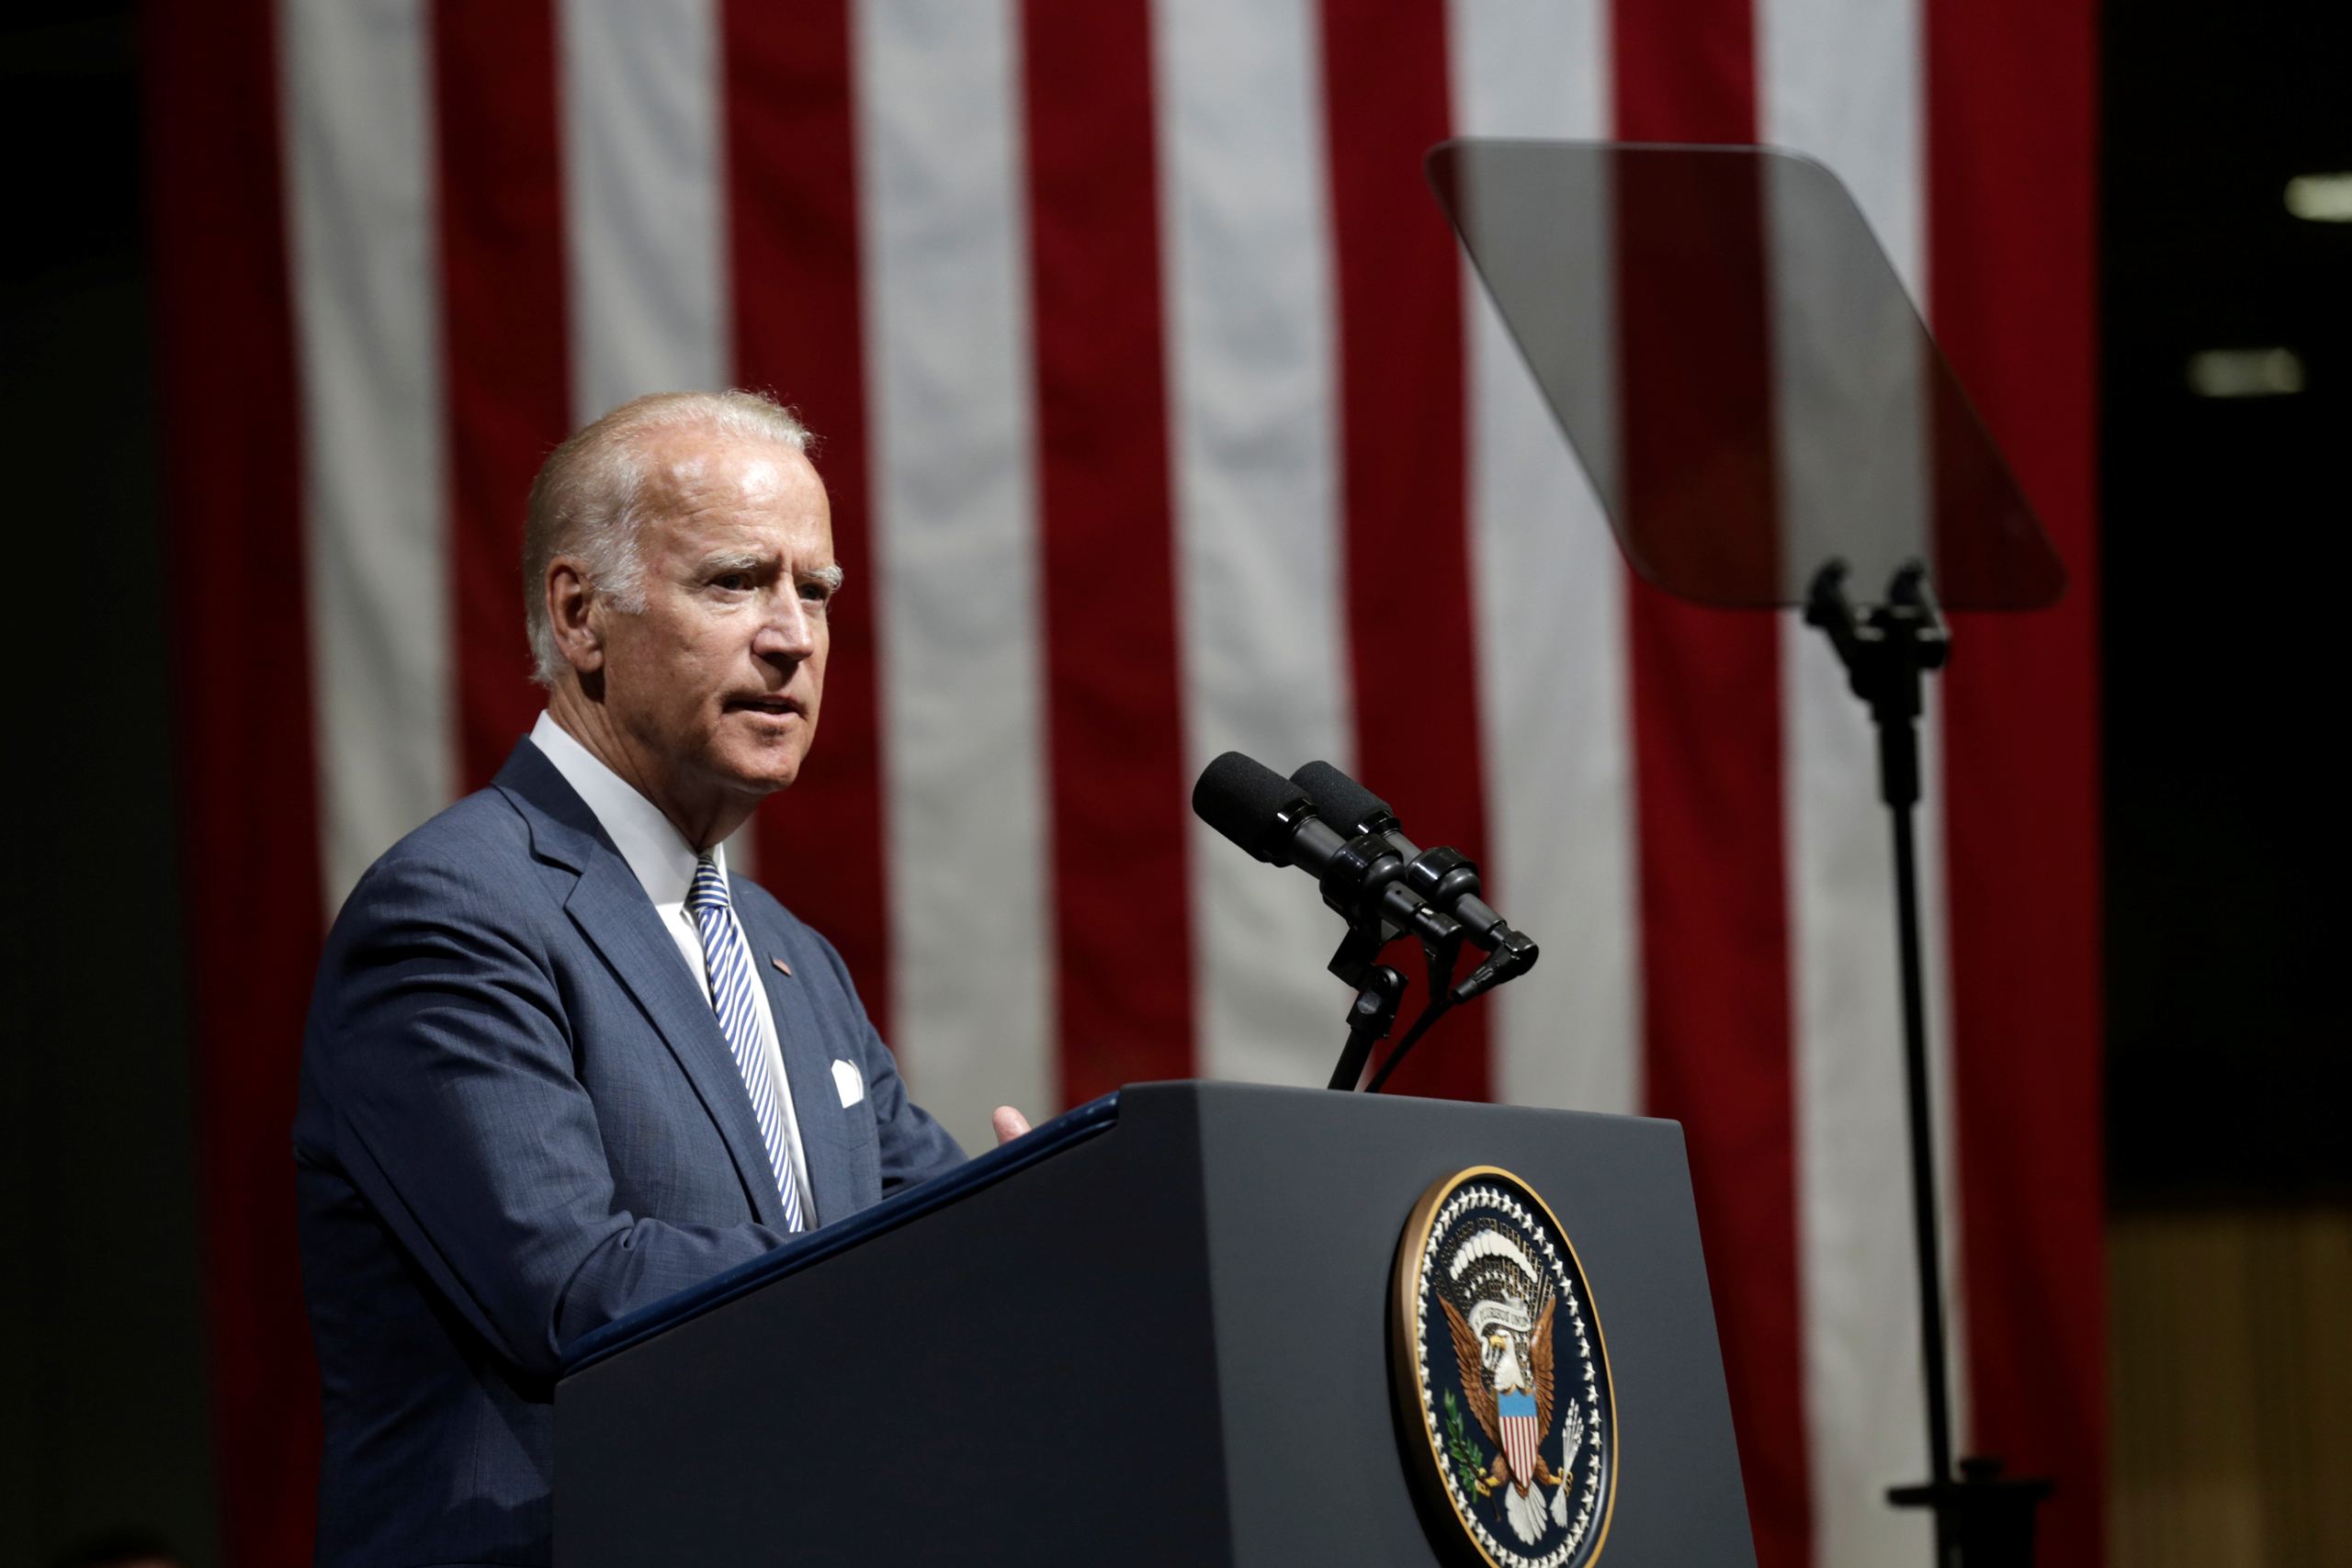 U.S. Vice President Joe Biden delivers a speech in Riga